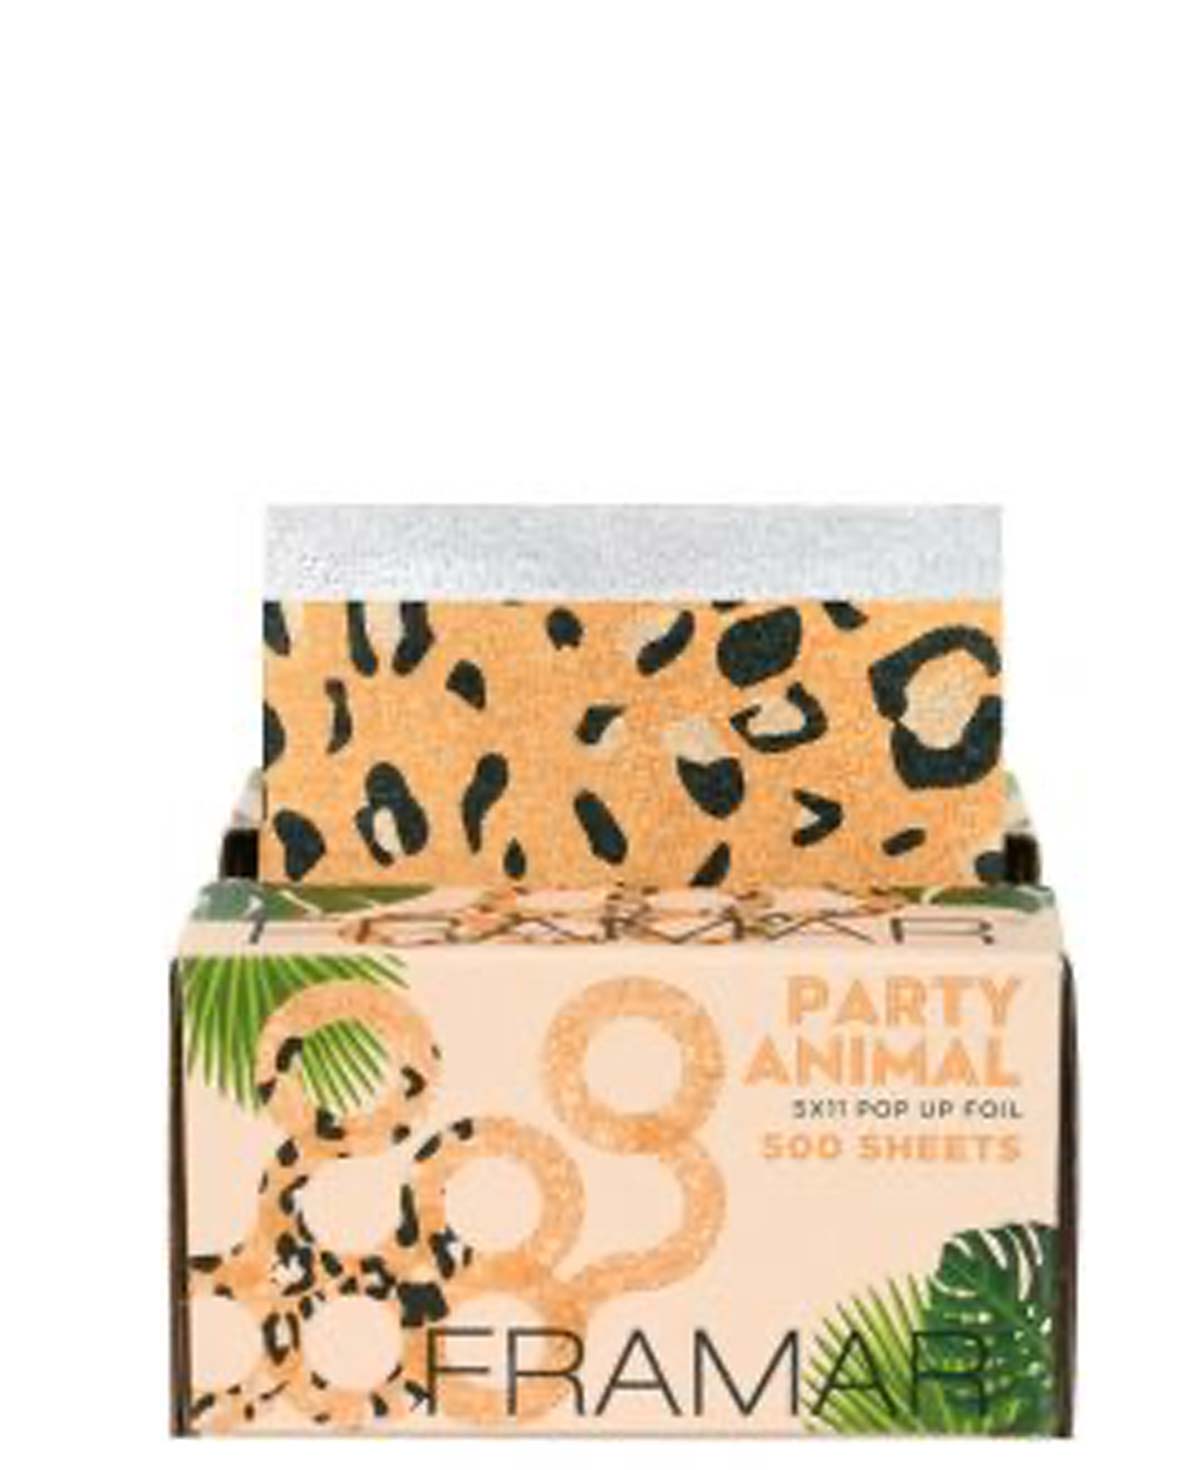 Framar 5x11 Pop Ups Party Animal  - 500 Sheets Lim.Edition